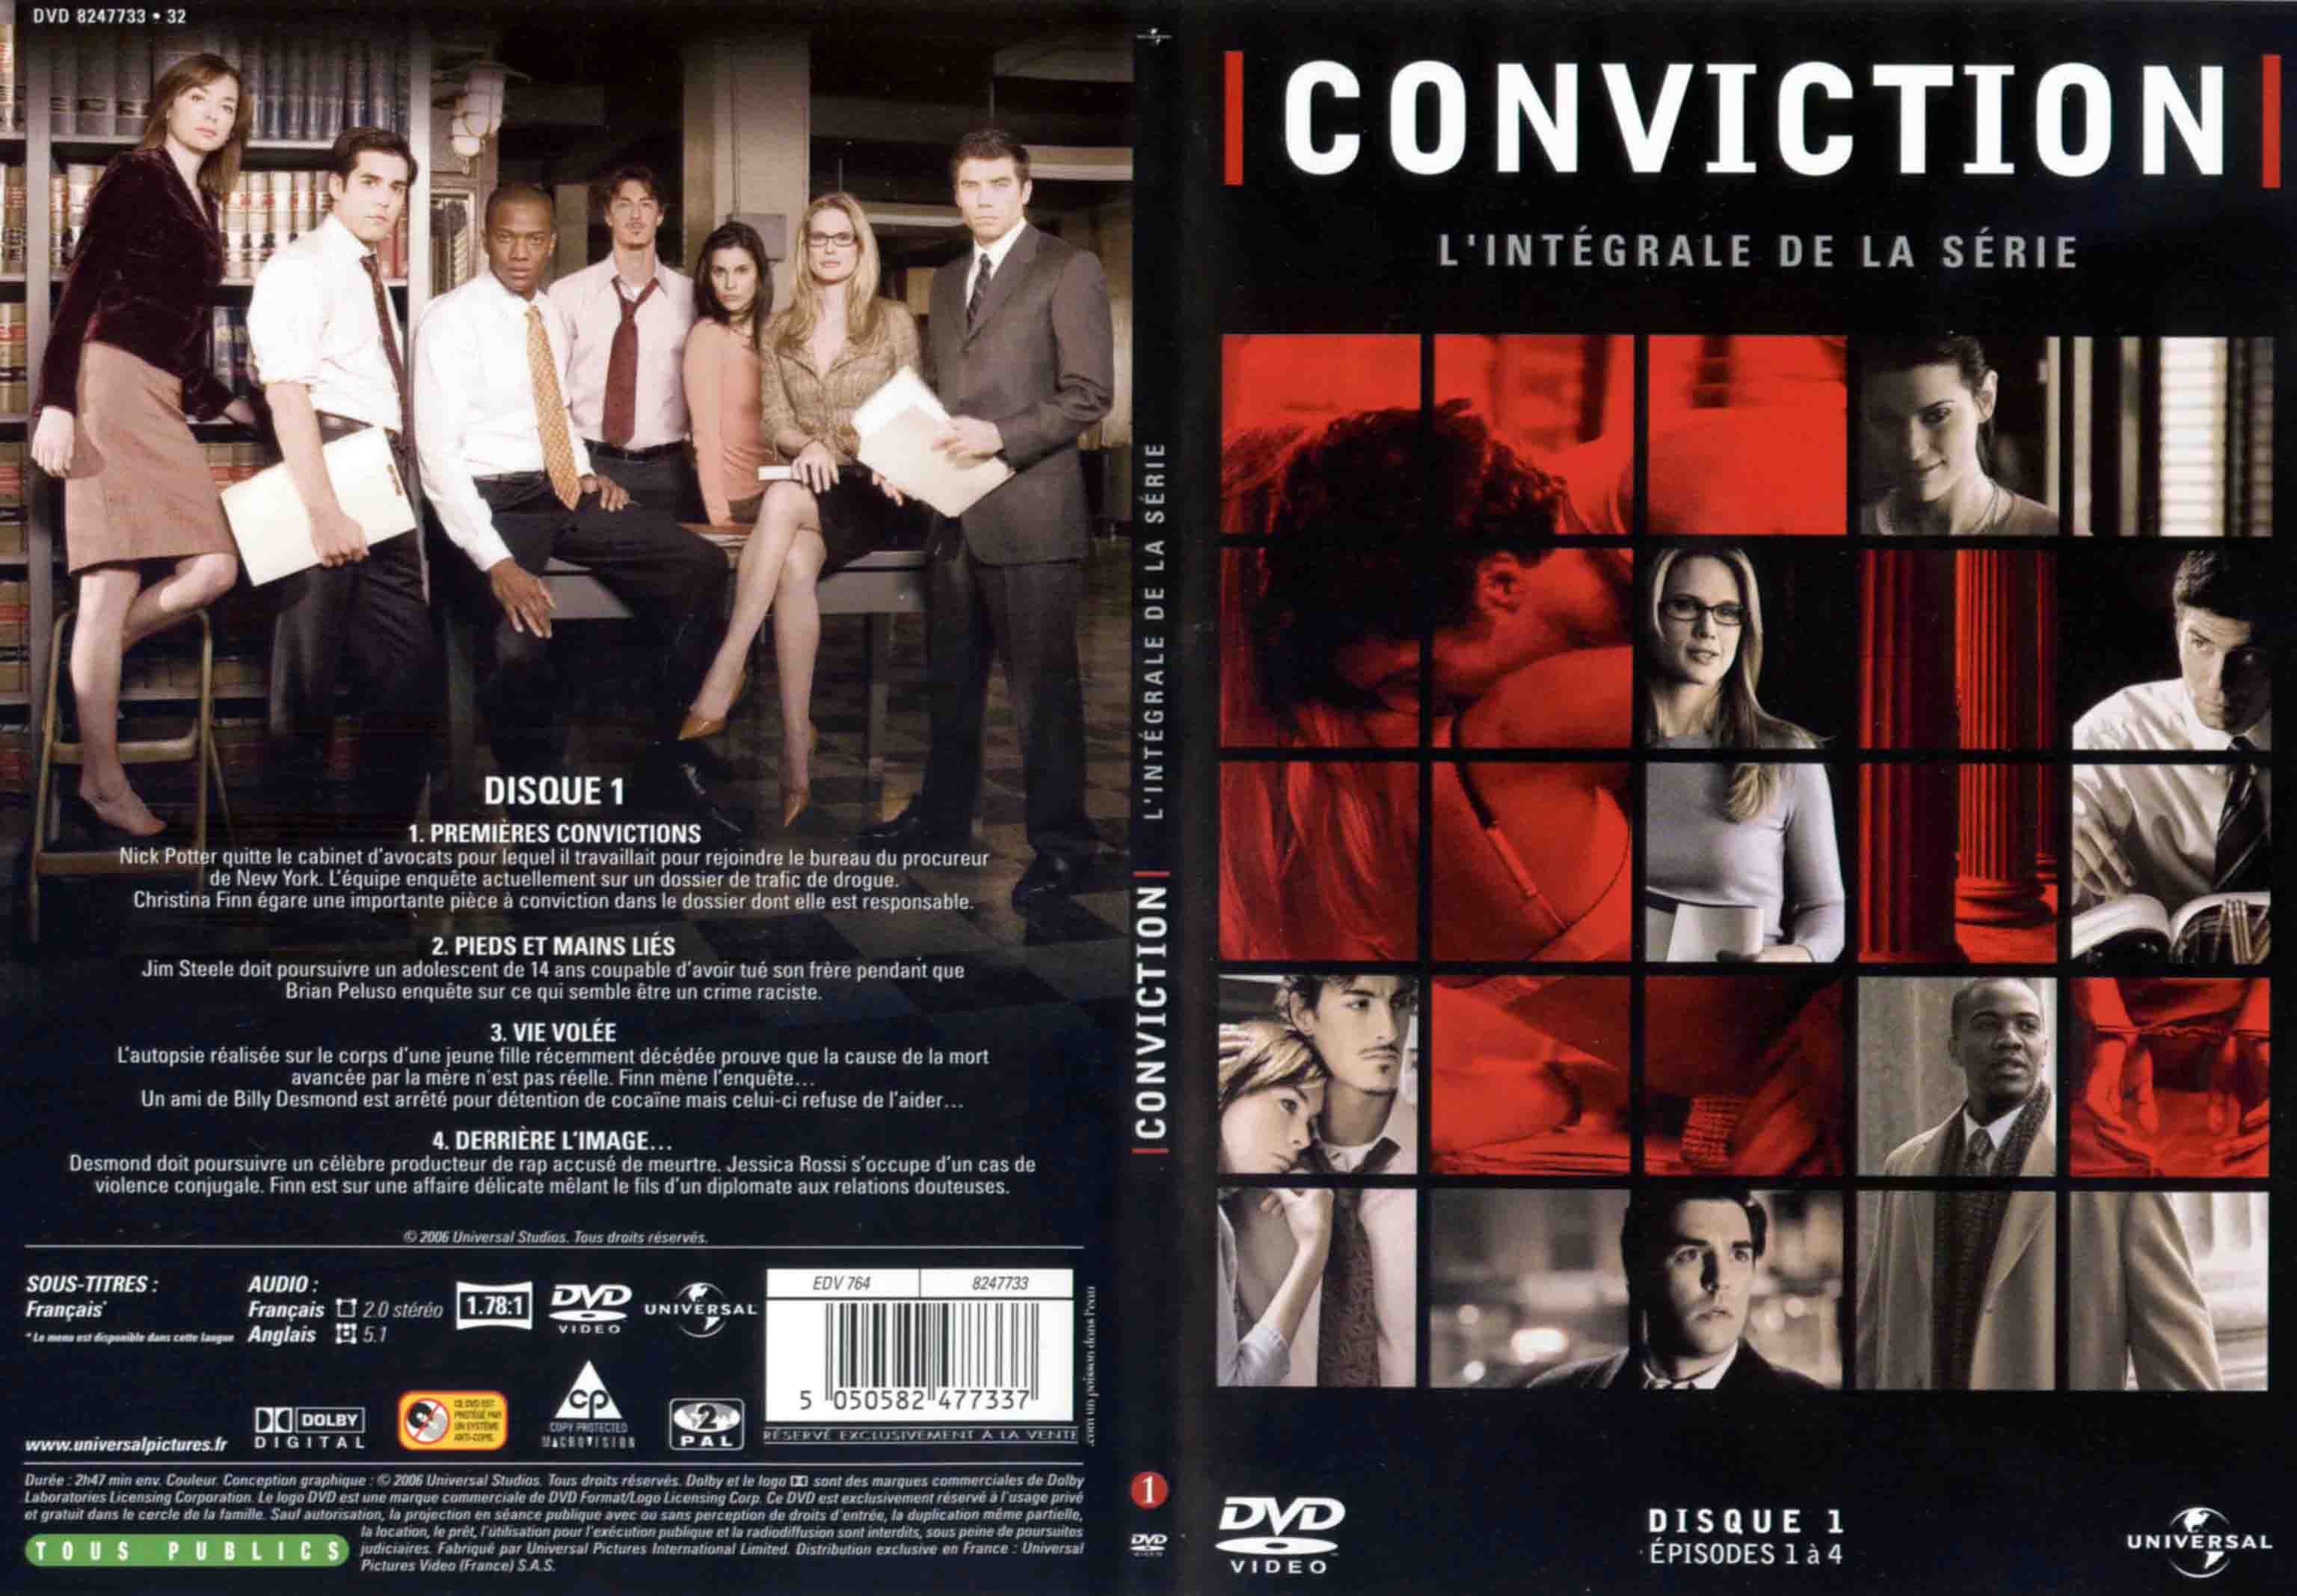 Jaquette DVD Conviction DVD 1